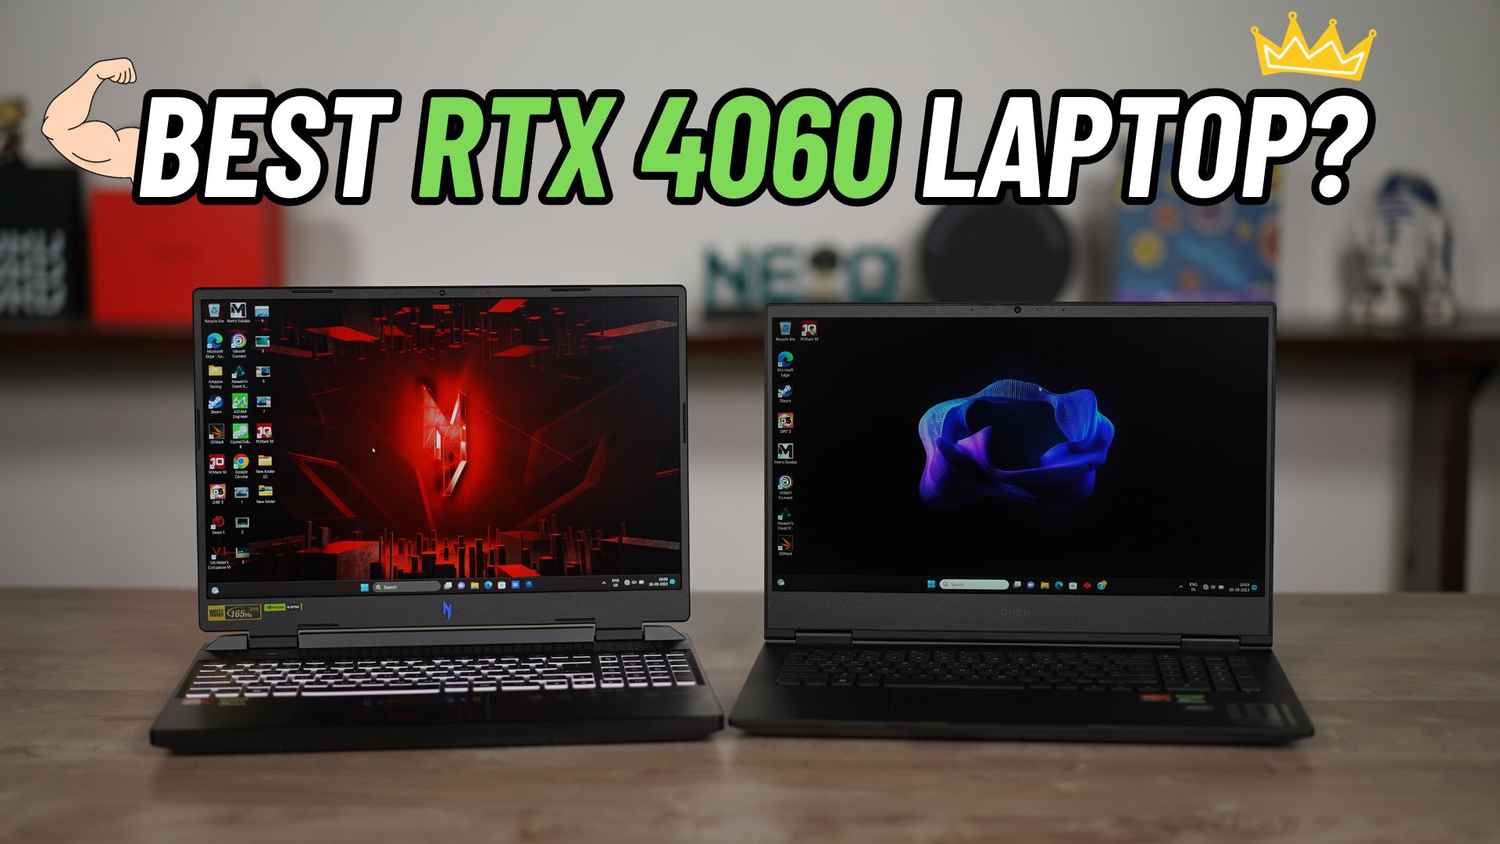 RTX 4060 laptop vs 3060 laptop performance, price & specs